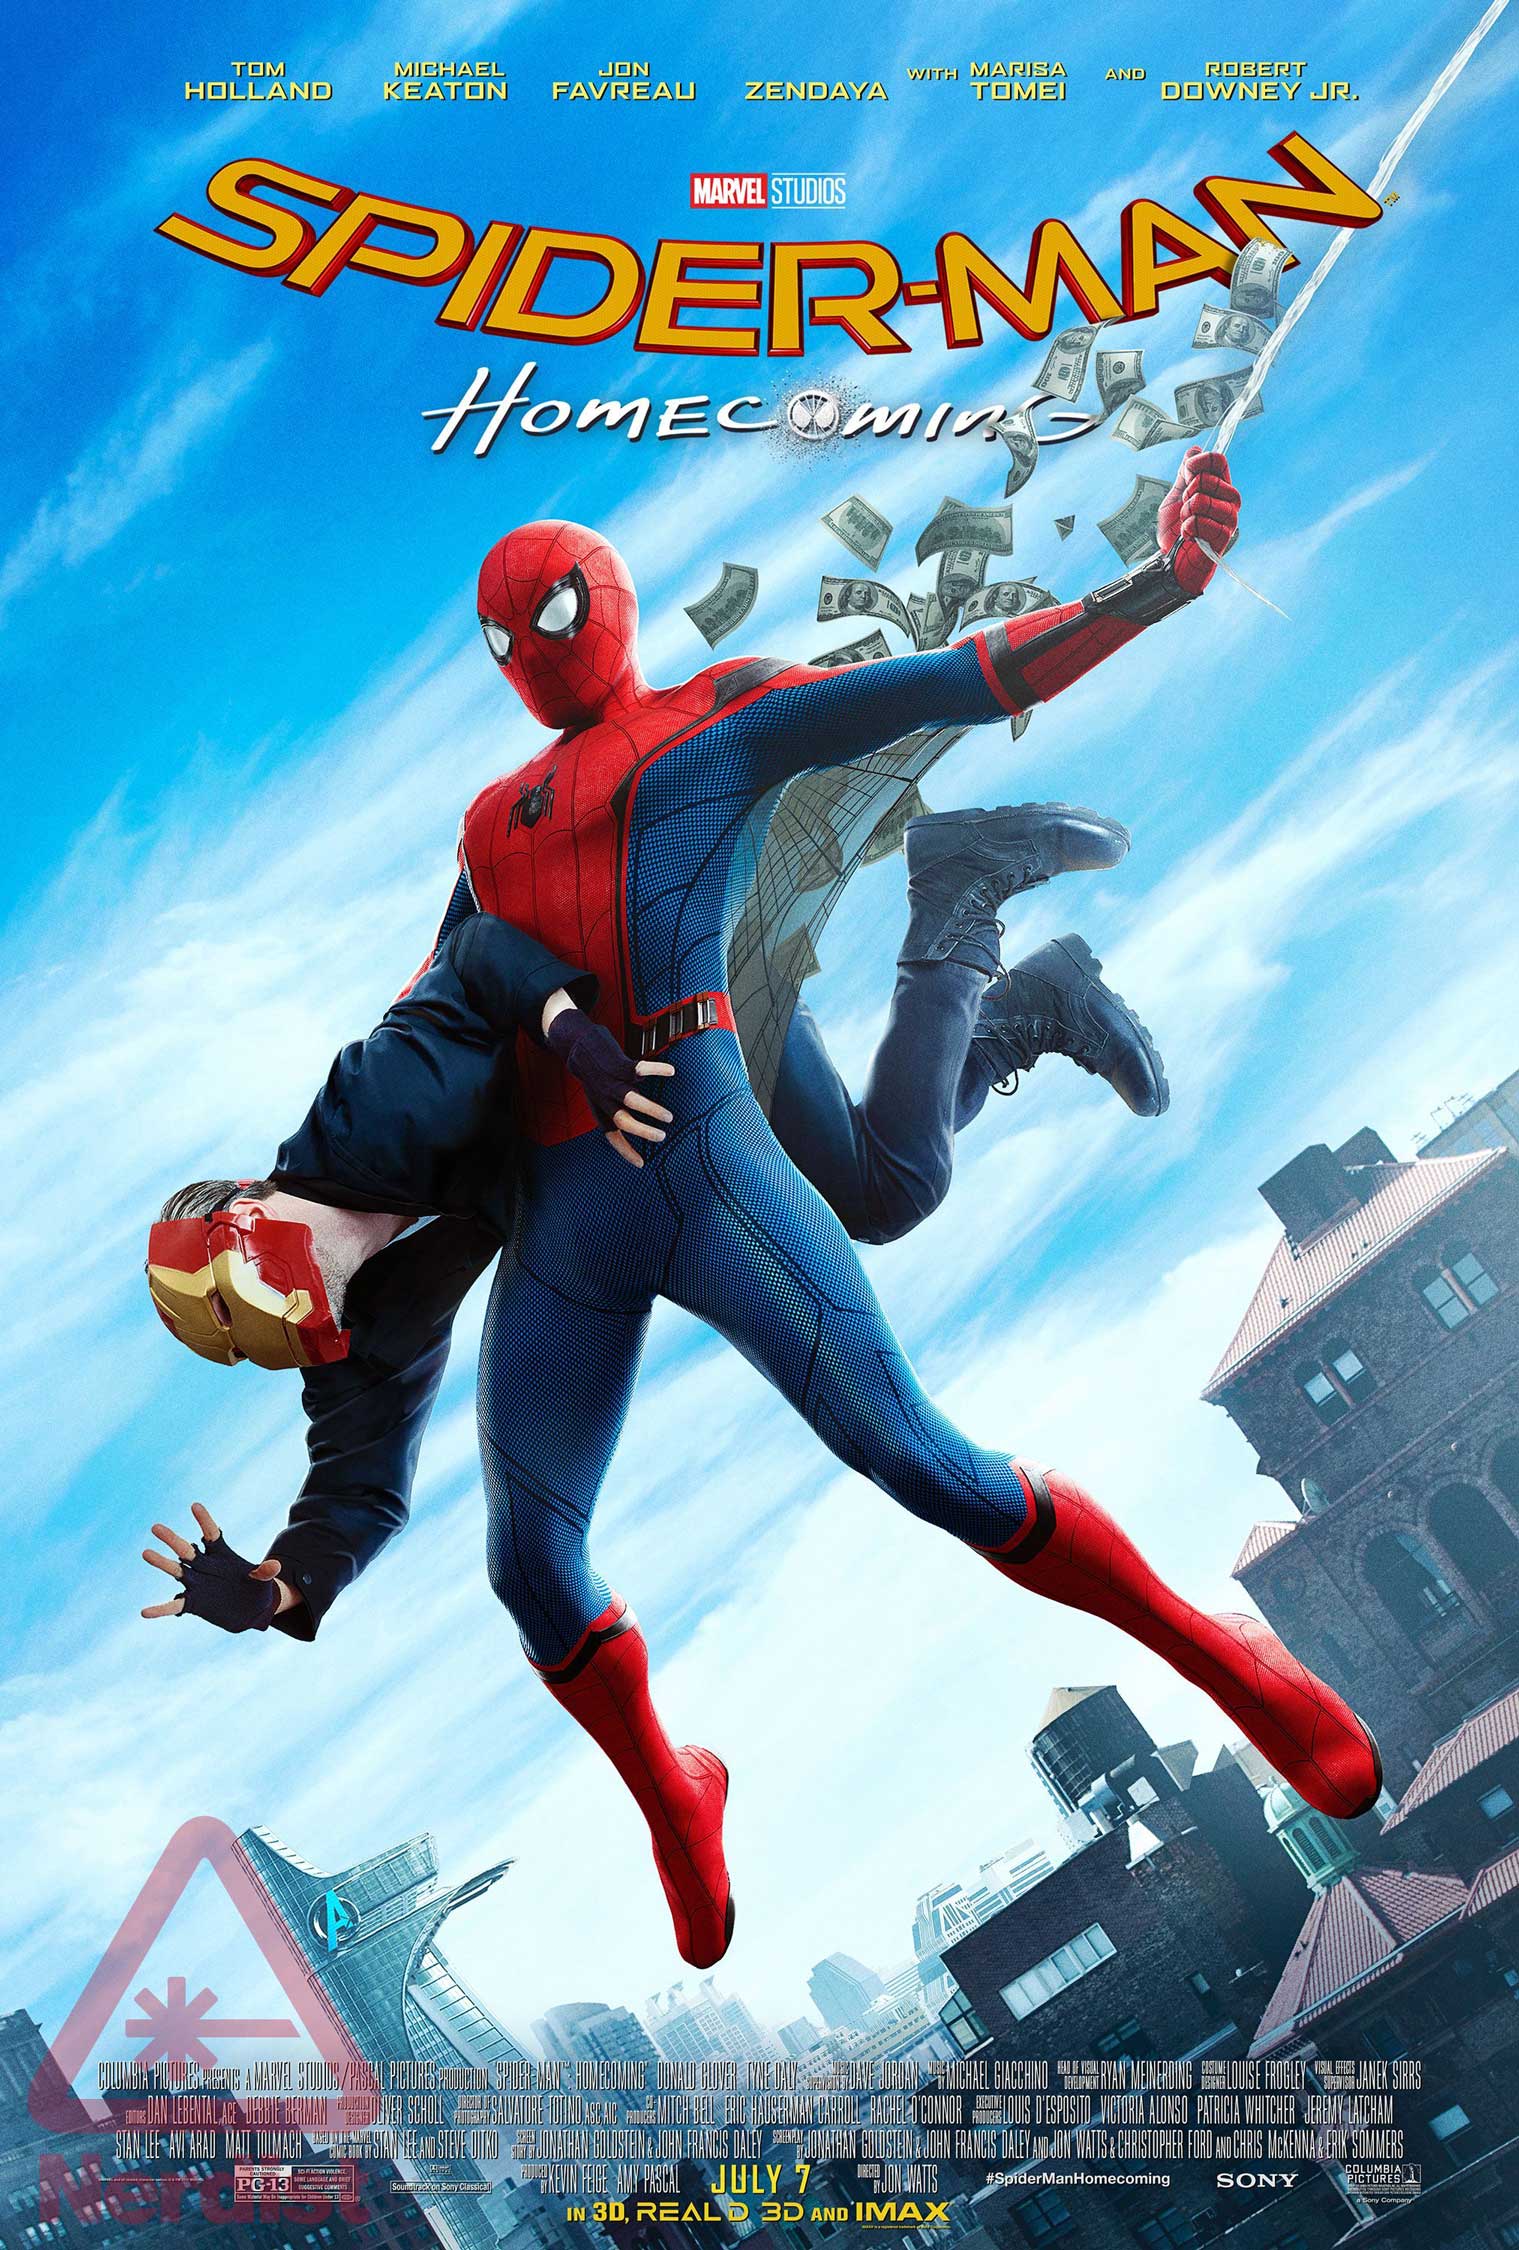 Photo_of_Spiderman_Homecoming:_Homecoming_poster_2017